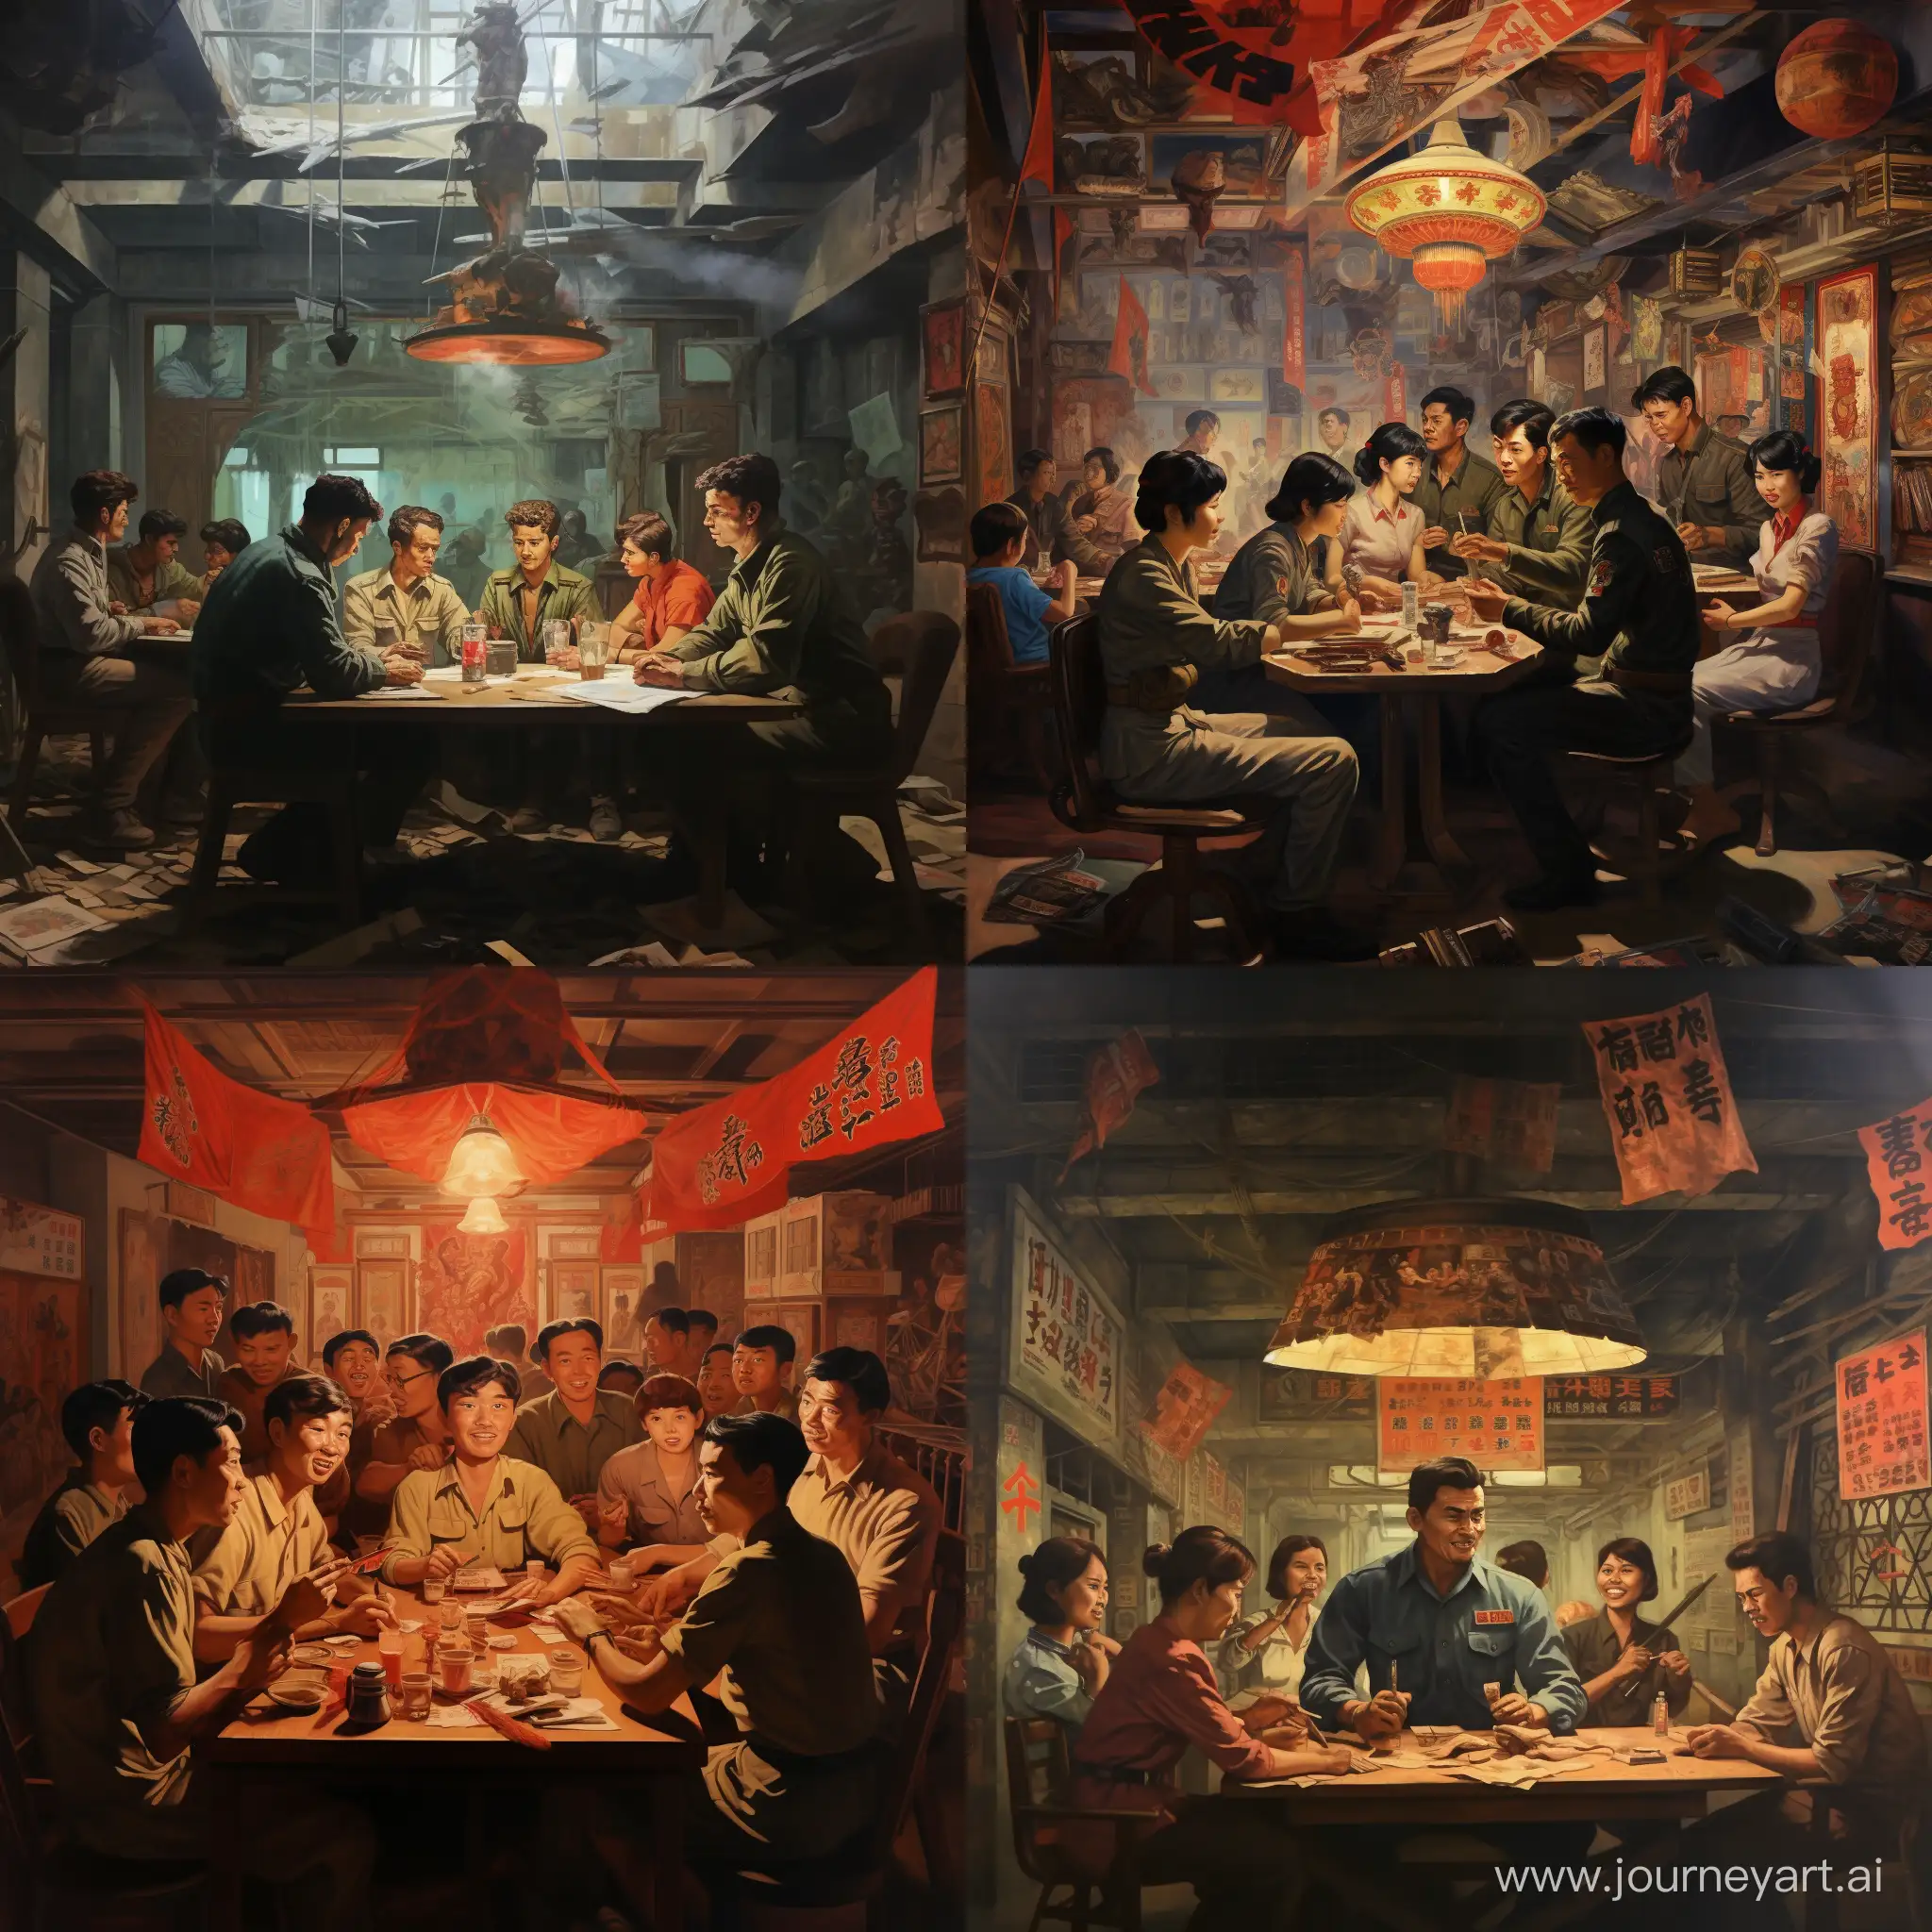 Dungeons-and-Dragons-Tavern-in-Pyongyang-North-Korean-Propaganda-Art